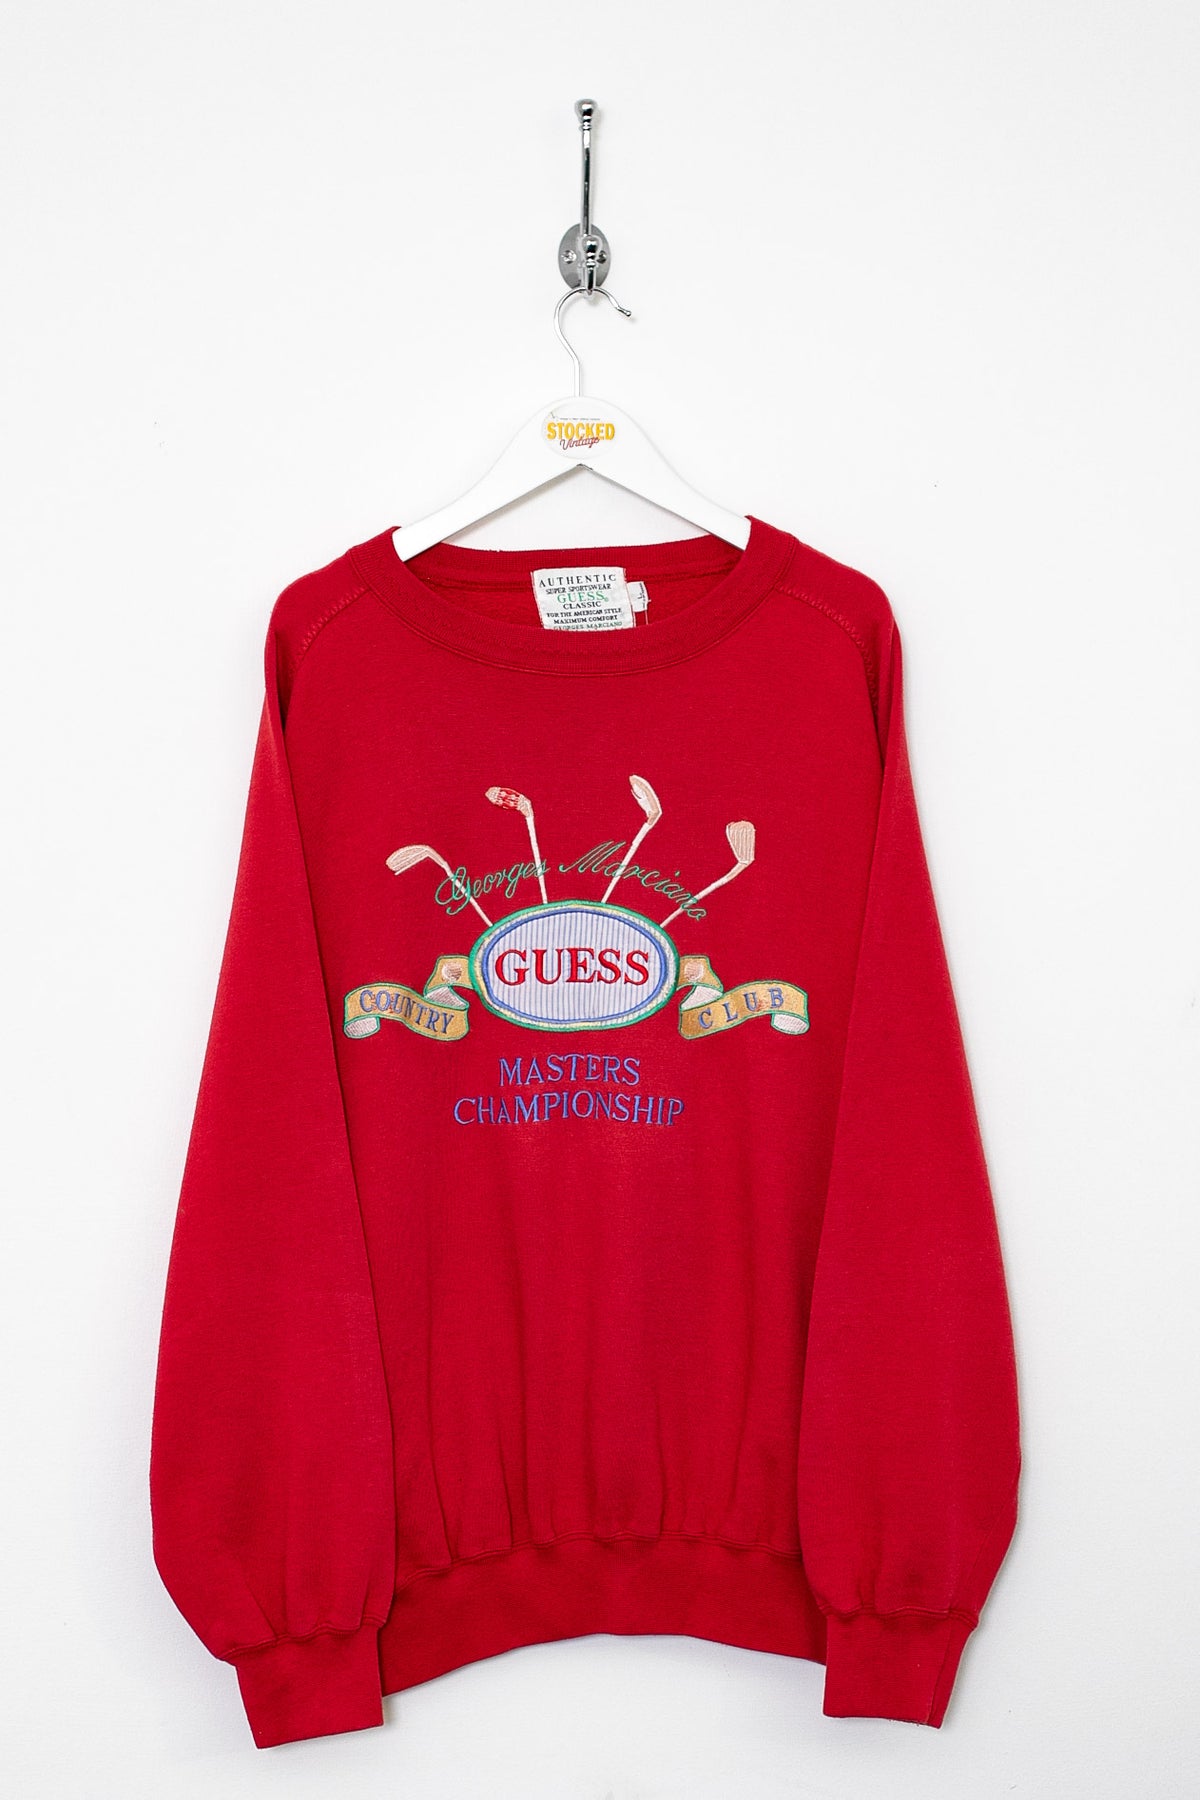 90s Guess Sweatshirt (L)